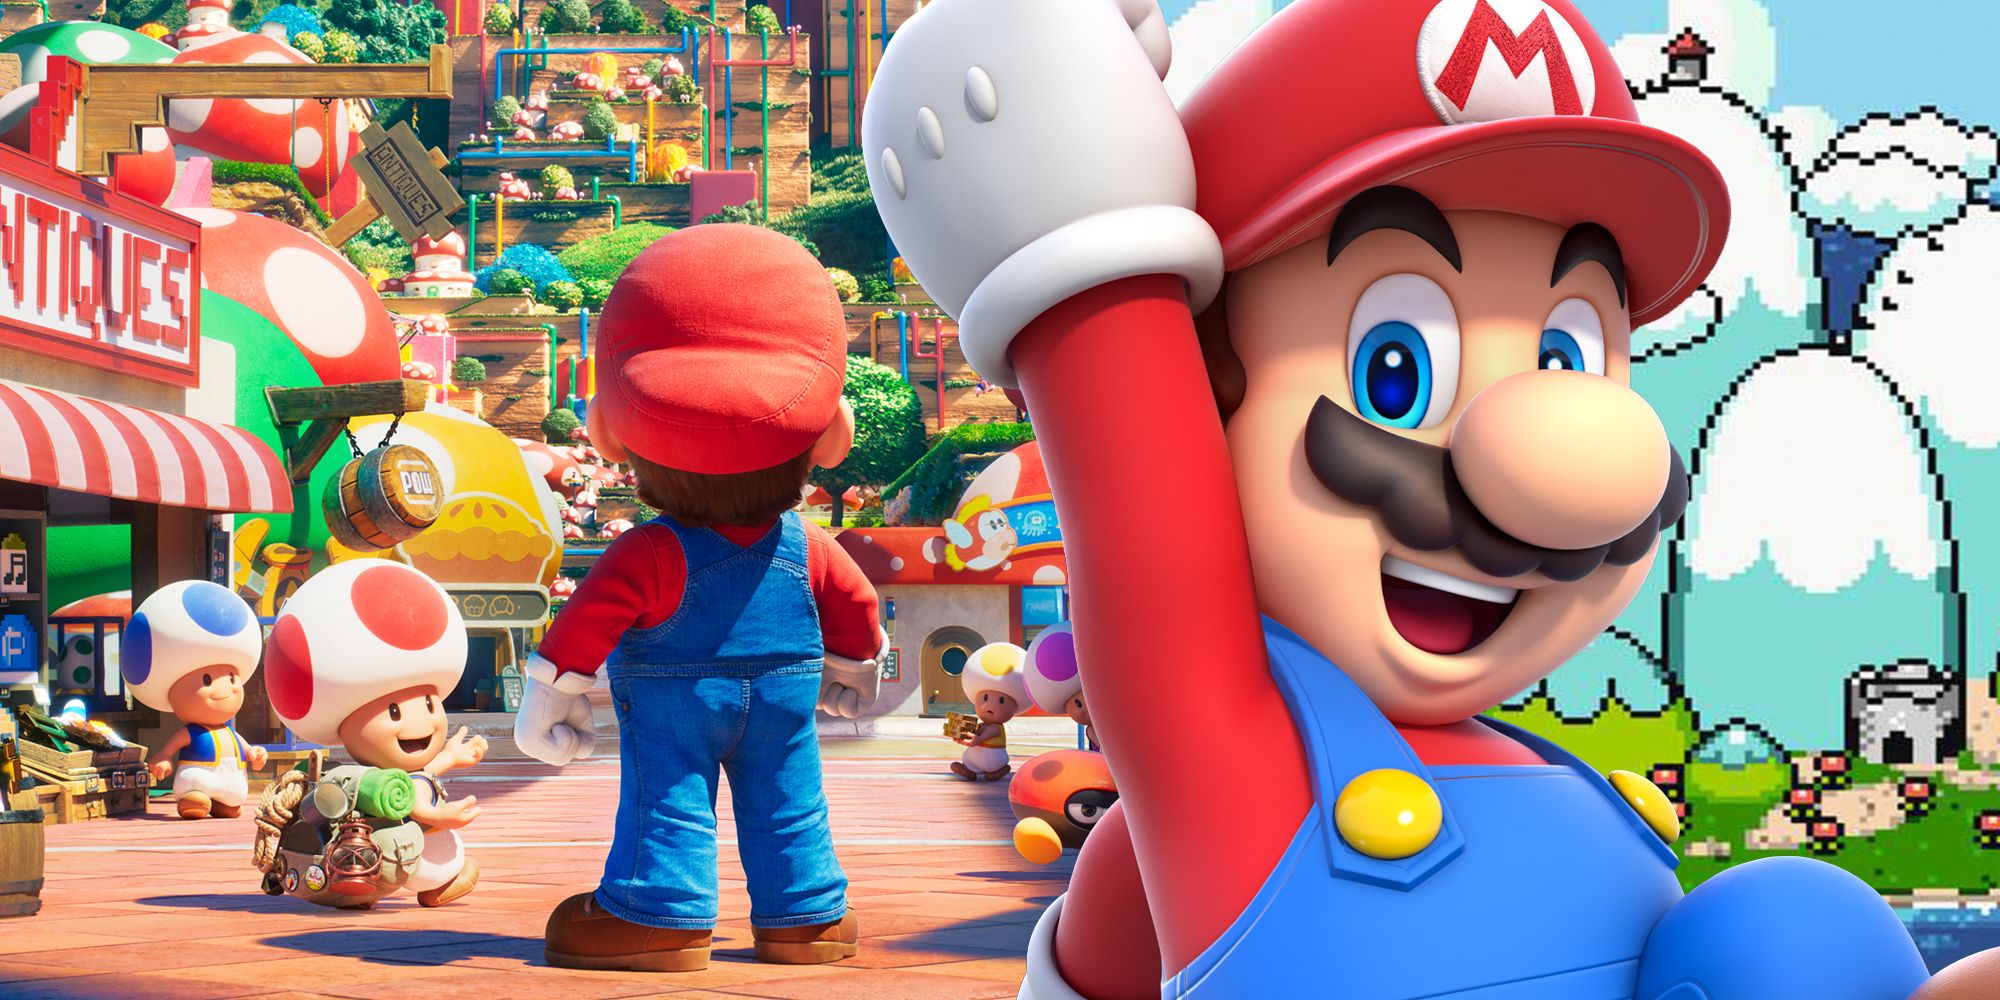 Mario and Illumination's Mario movie poster